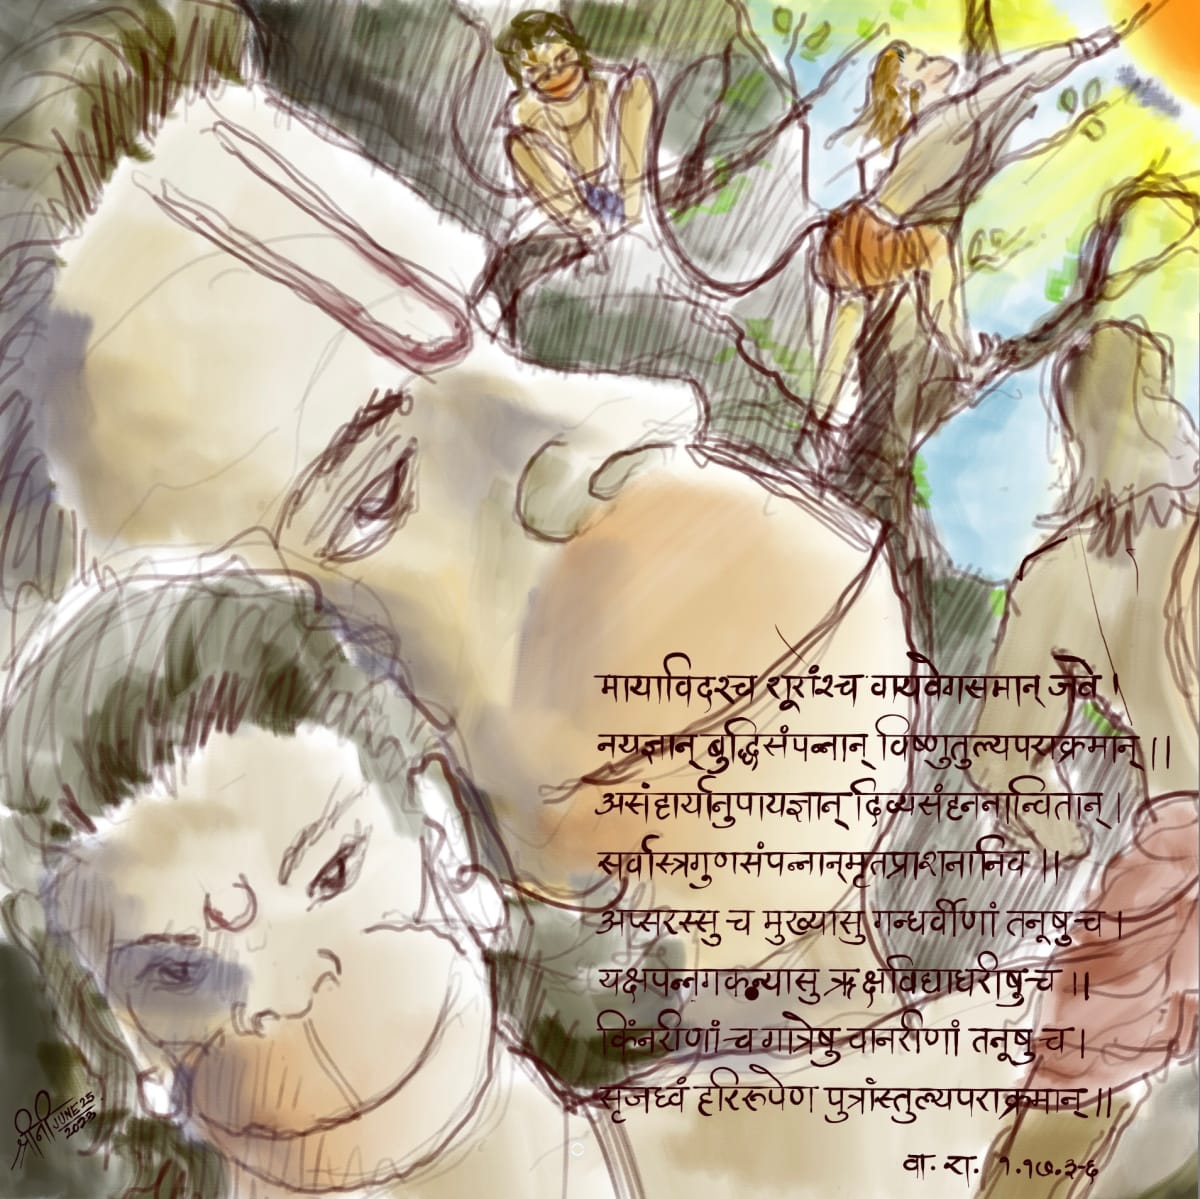 Vanaras - The Agencies of Dharma by Srini श्रीनी శ్రీనీ  Image: Vanaras - The Agencies of Dharma